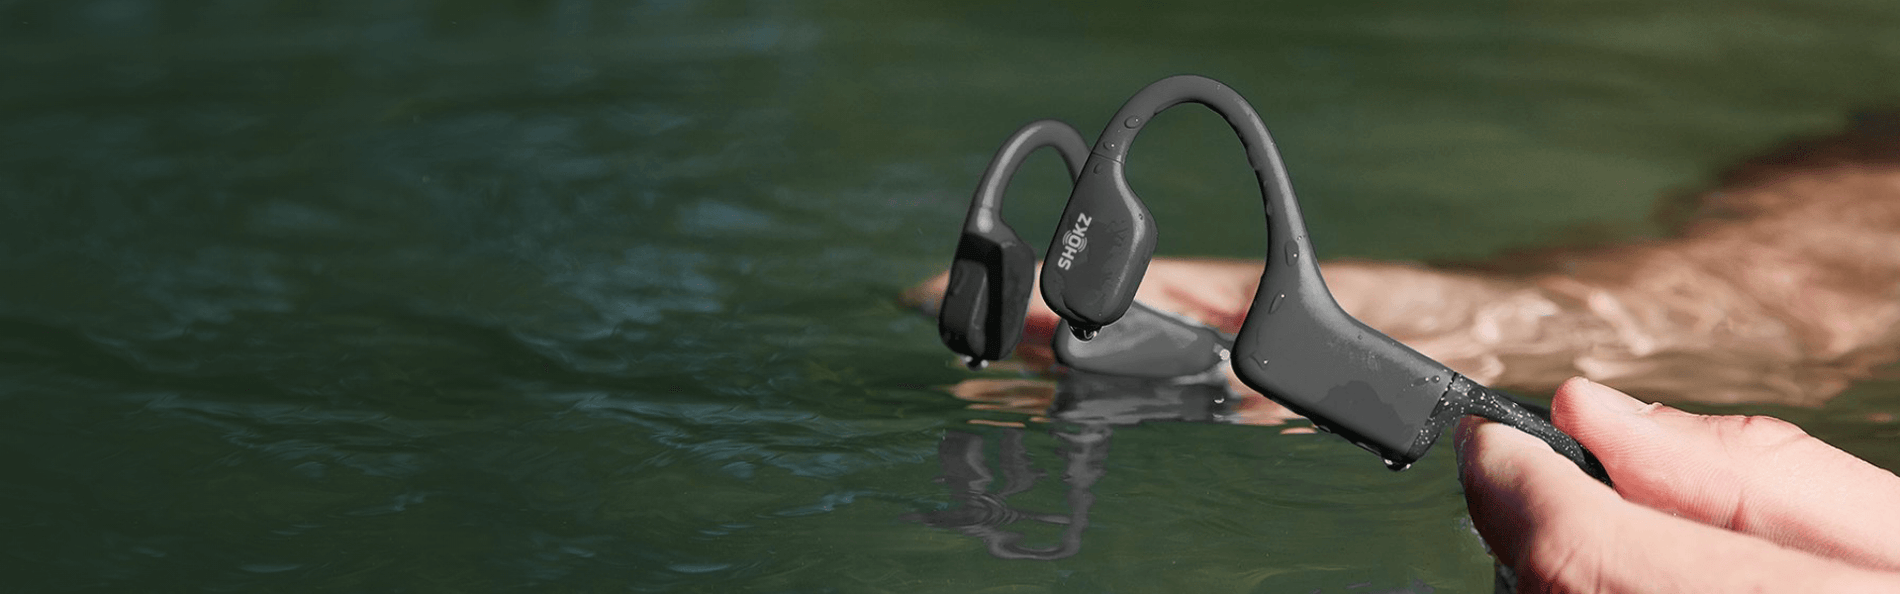 Waterproof Headphones for swimming h2o audio h20 audio swim headphones -  H2O Audio